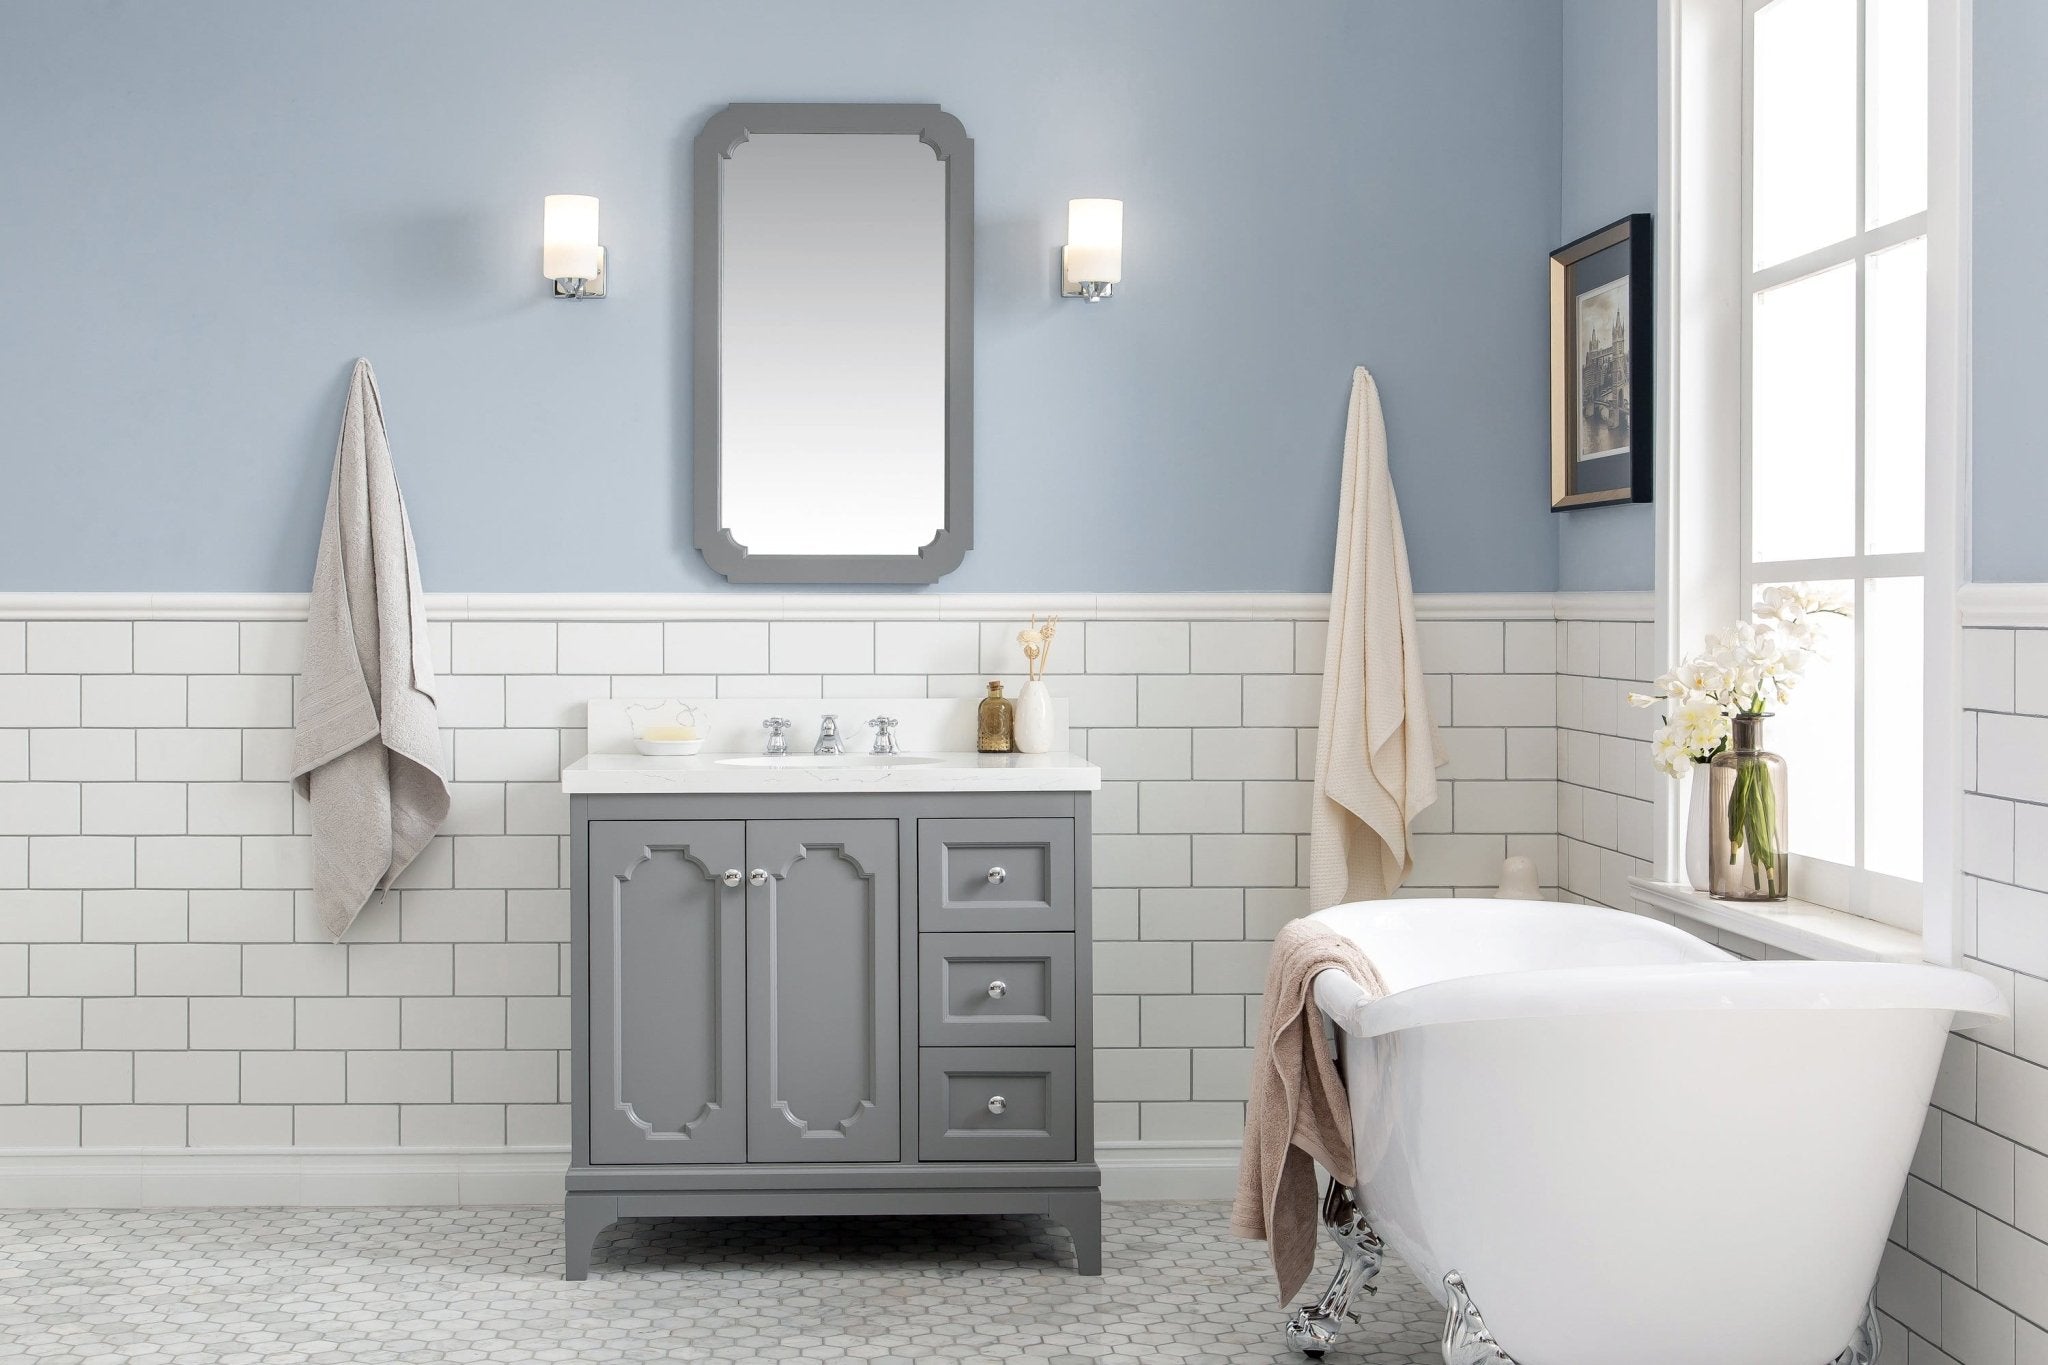 Water Creation Queen 36-Inch Single Sink Quartz Carrara Vanity In Cashmere Grey With F2-0009-01-BX Lavatory Faucet(s) - Molaix732030758001Bathroom vanityQU36QZ01CG-000BX0901